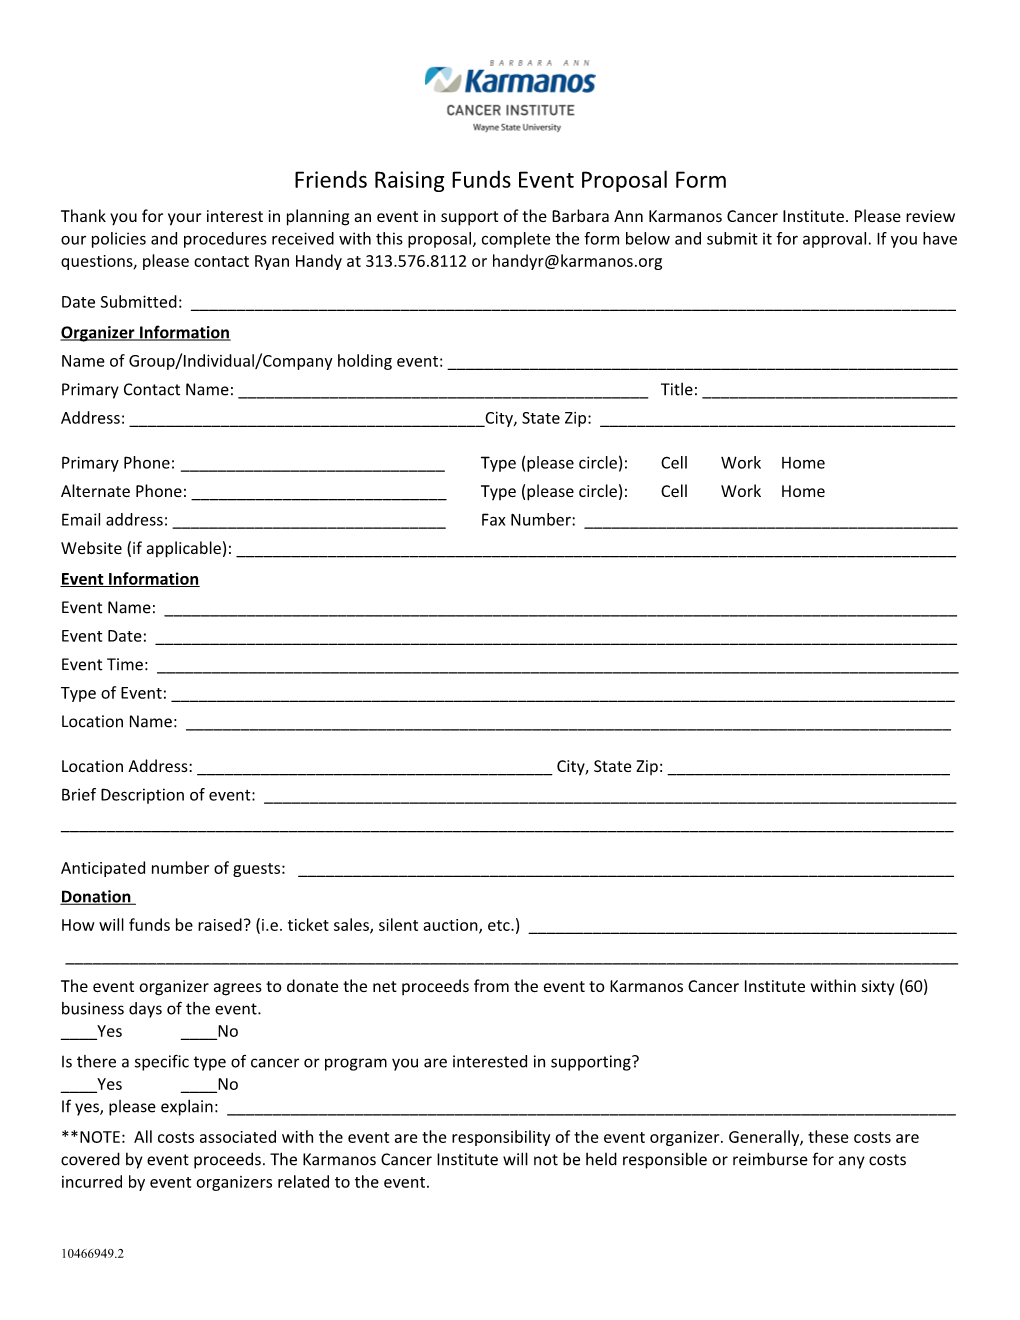 Friends Raising Funds Event Proposal Form